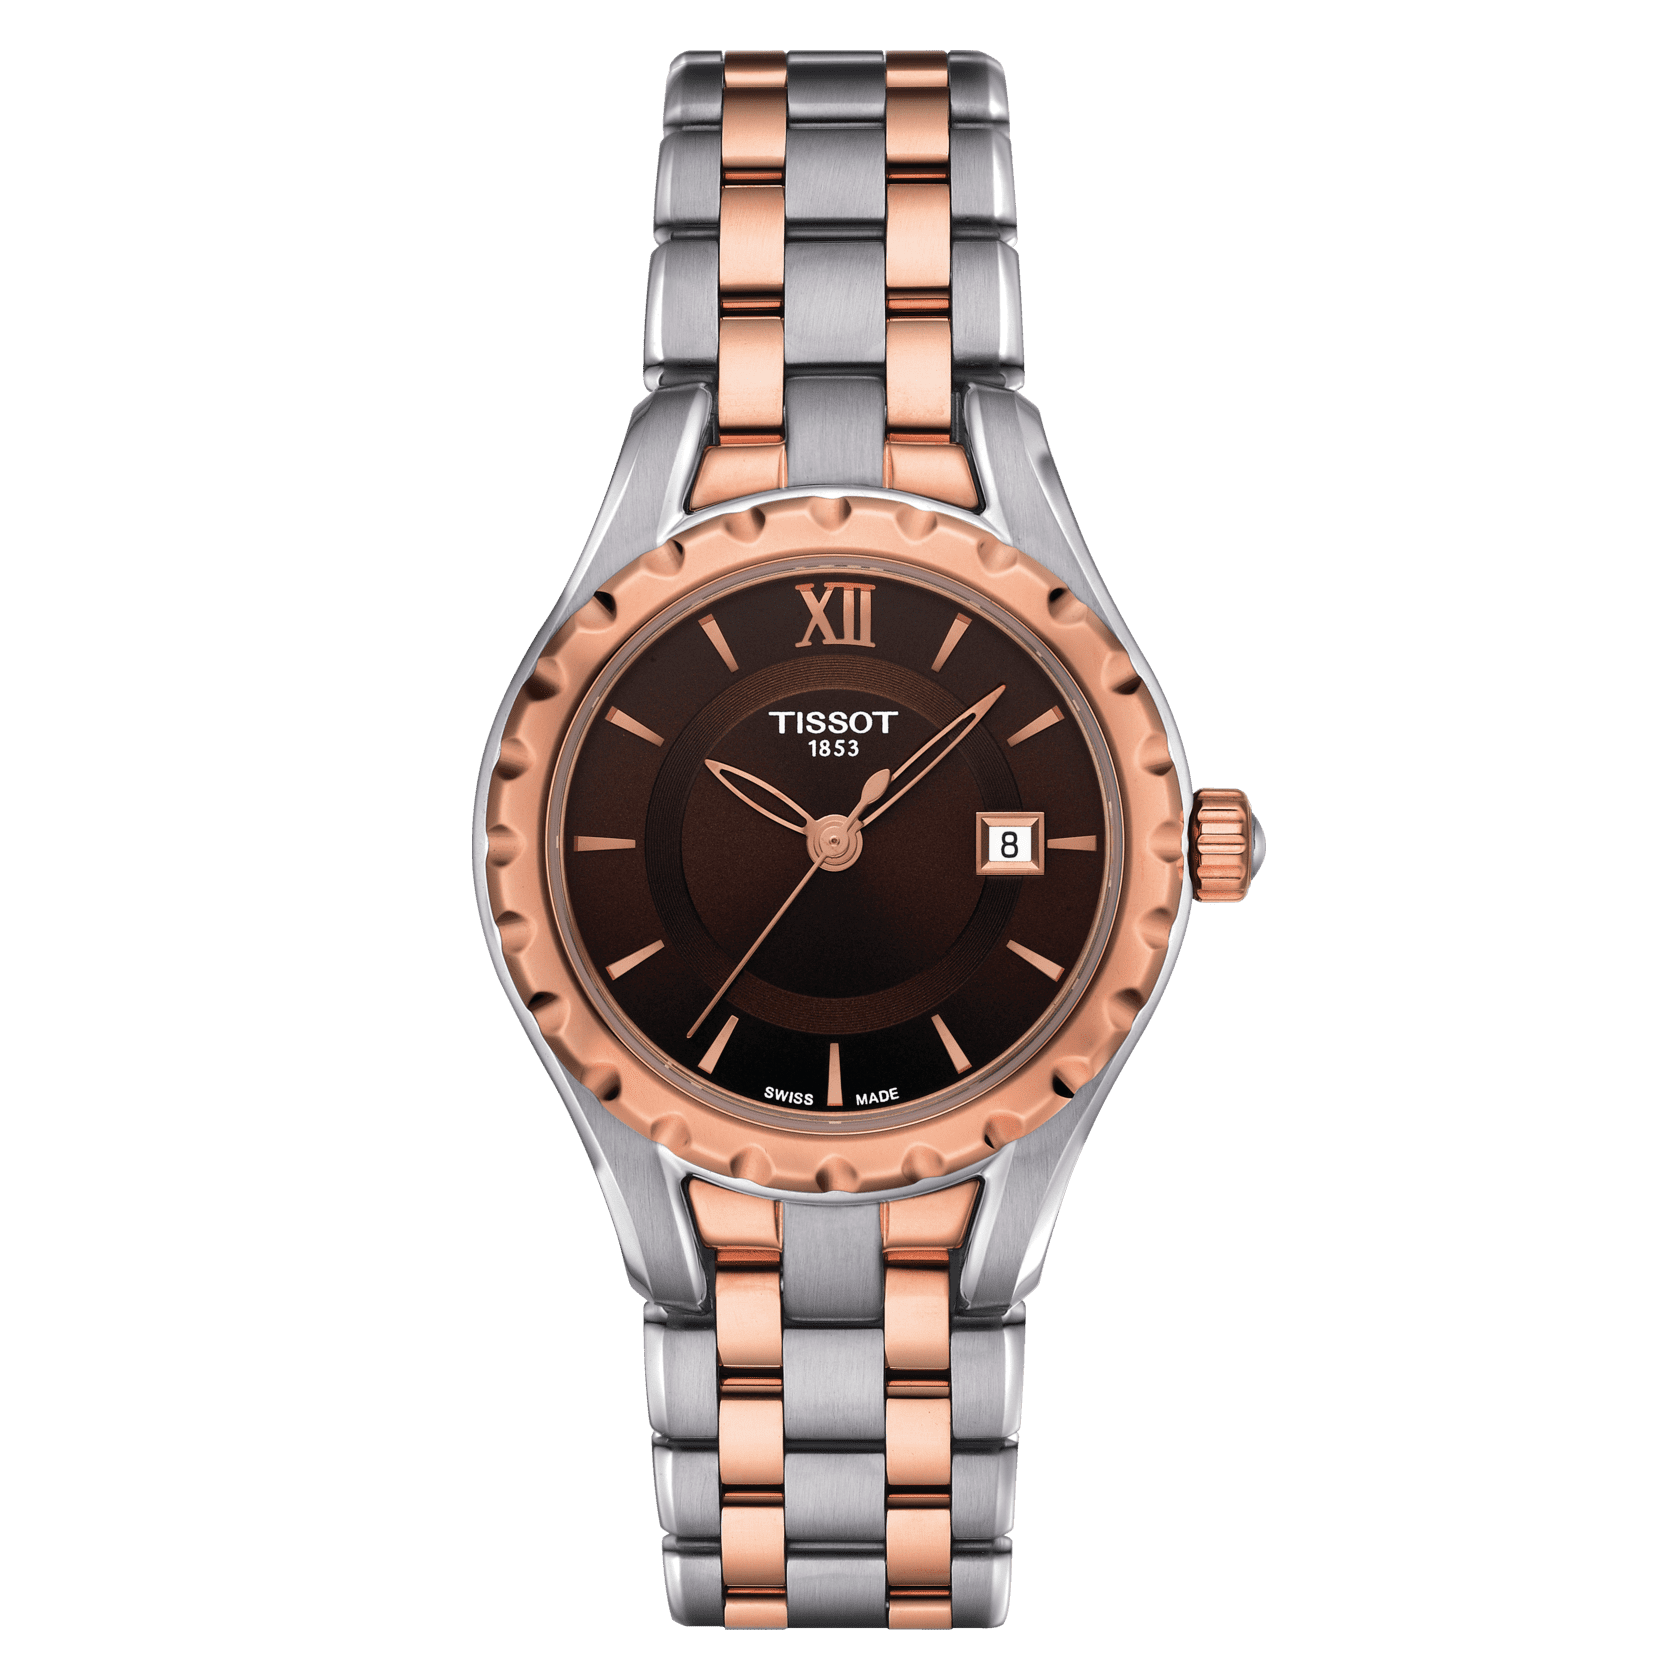 Ebay Replica Cartier Mens Watches